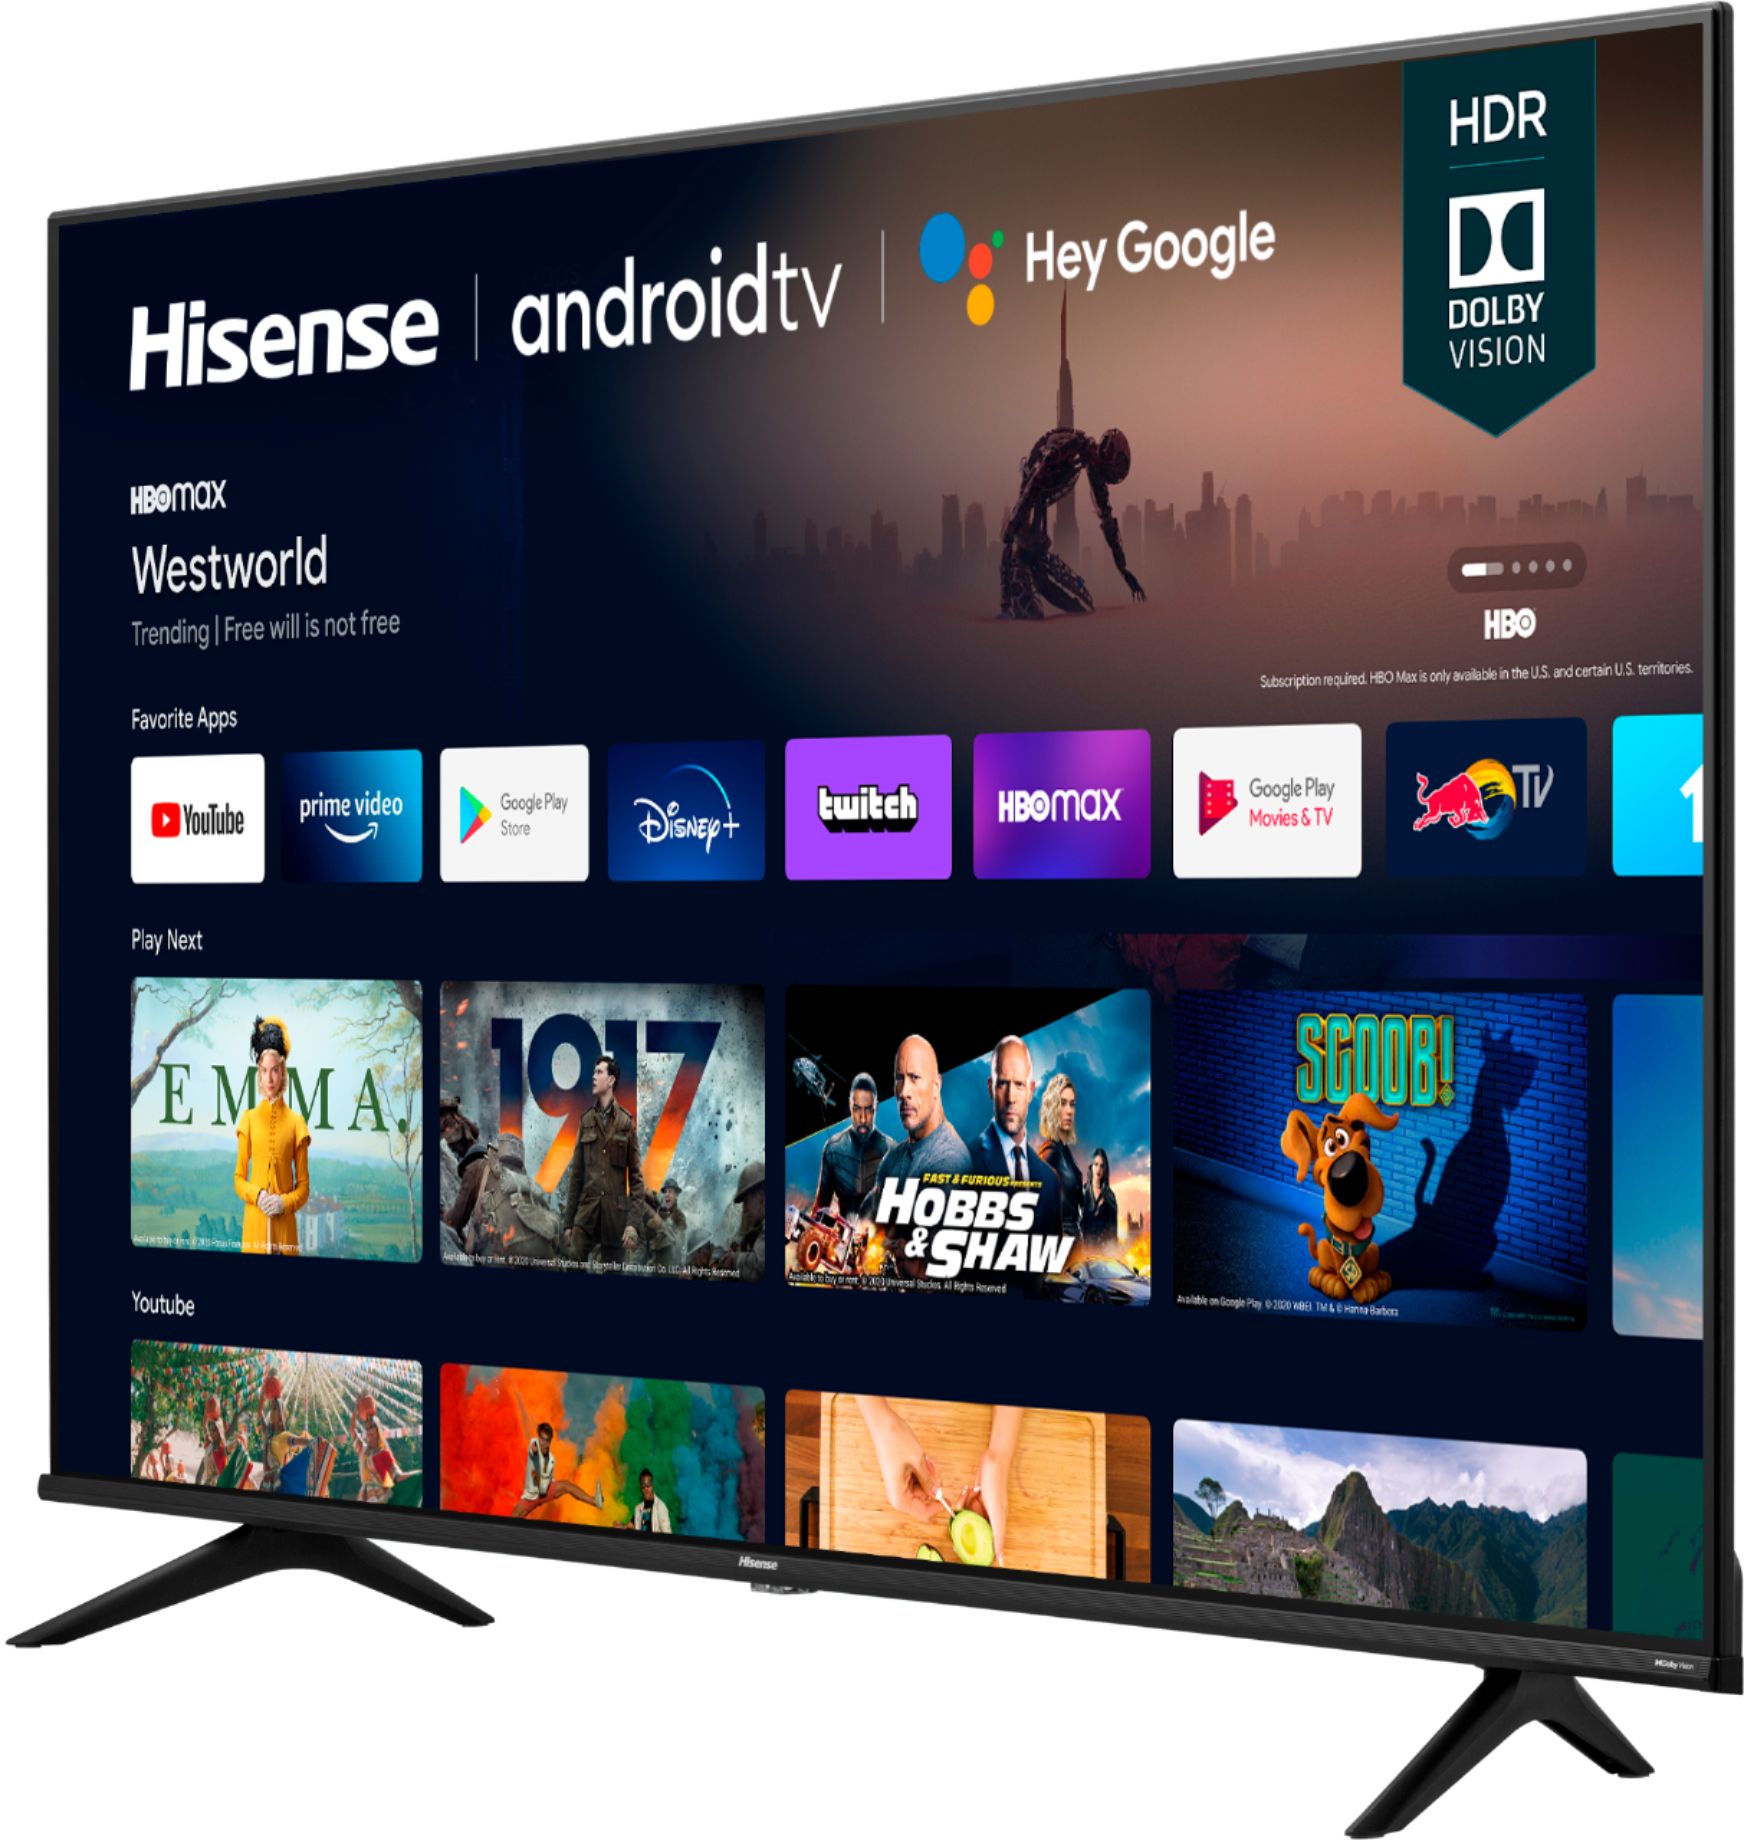  Hisense Serie A4 Smart TV Android FHD de 40 pulgadas